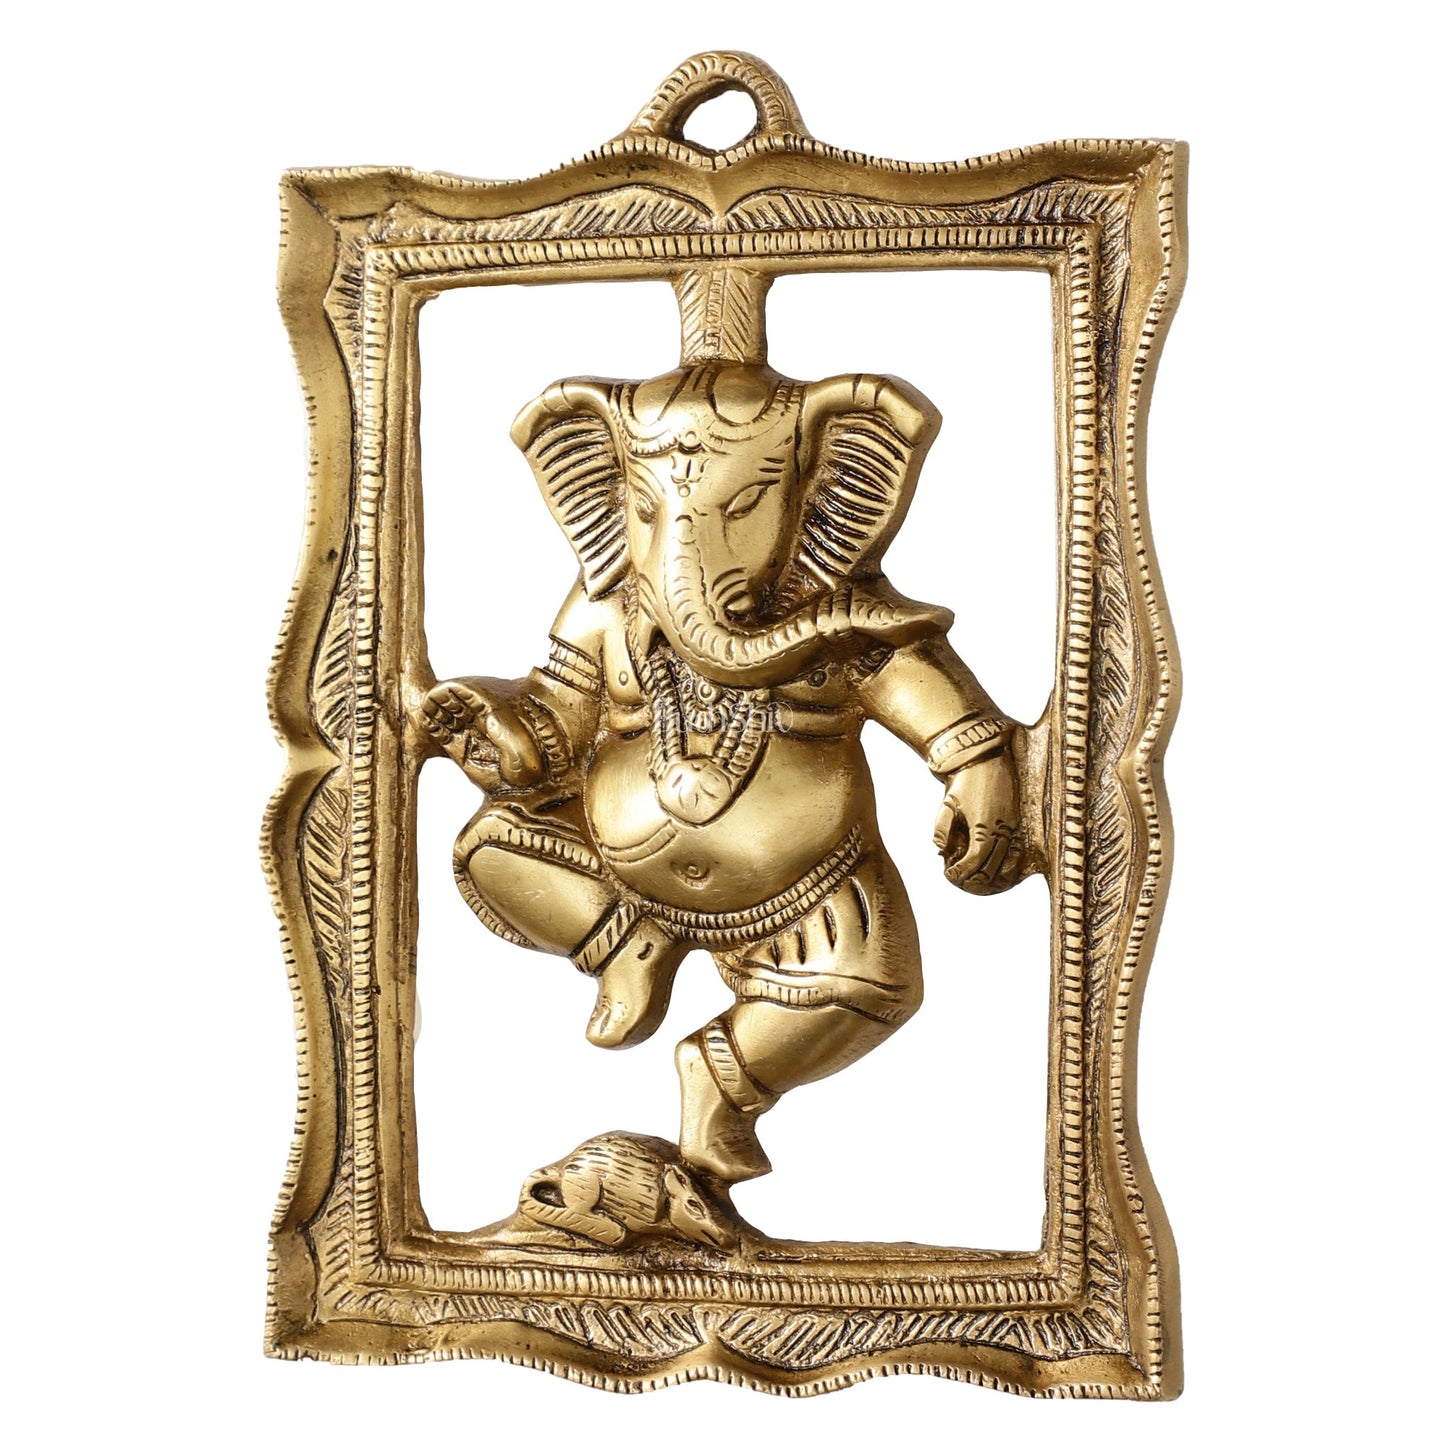 Brass Dancing Ganesha Wall Hanging - 8 x 6 inch - Budhshiv.com